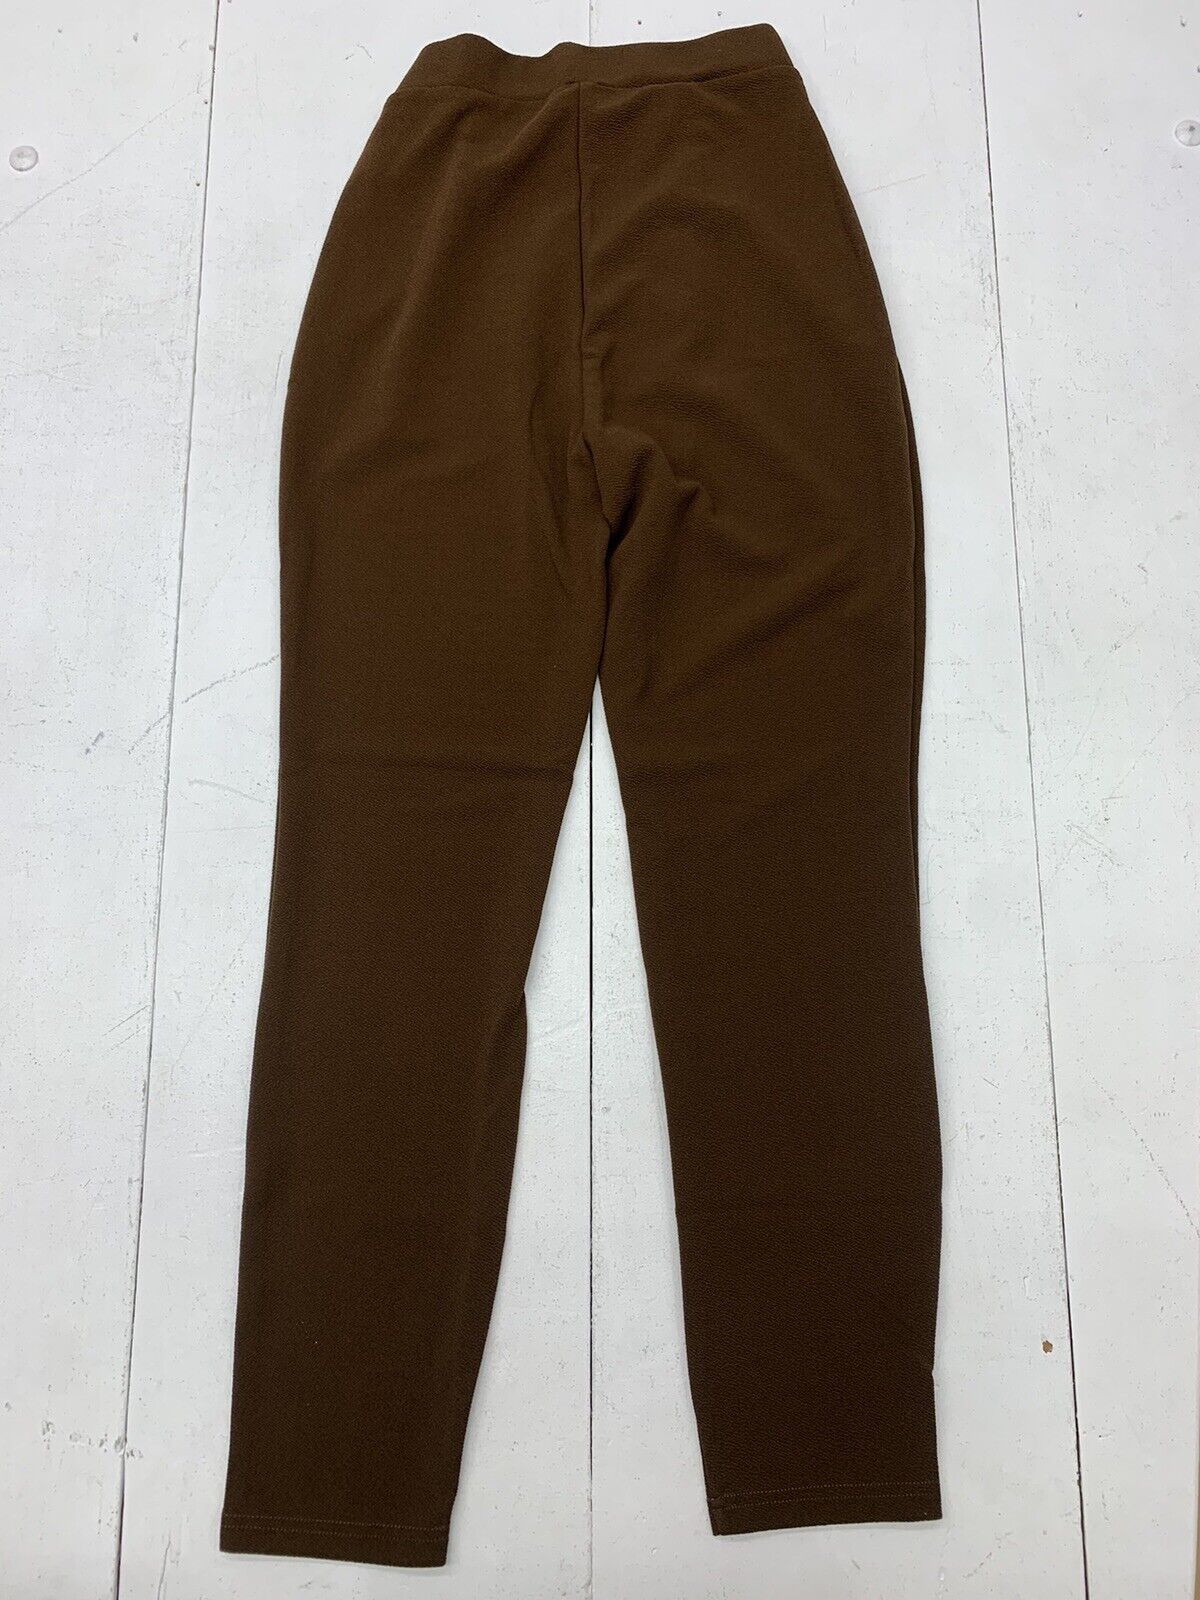 Shein Womens Brown Dress Pants Size Large - beyond exchange